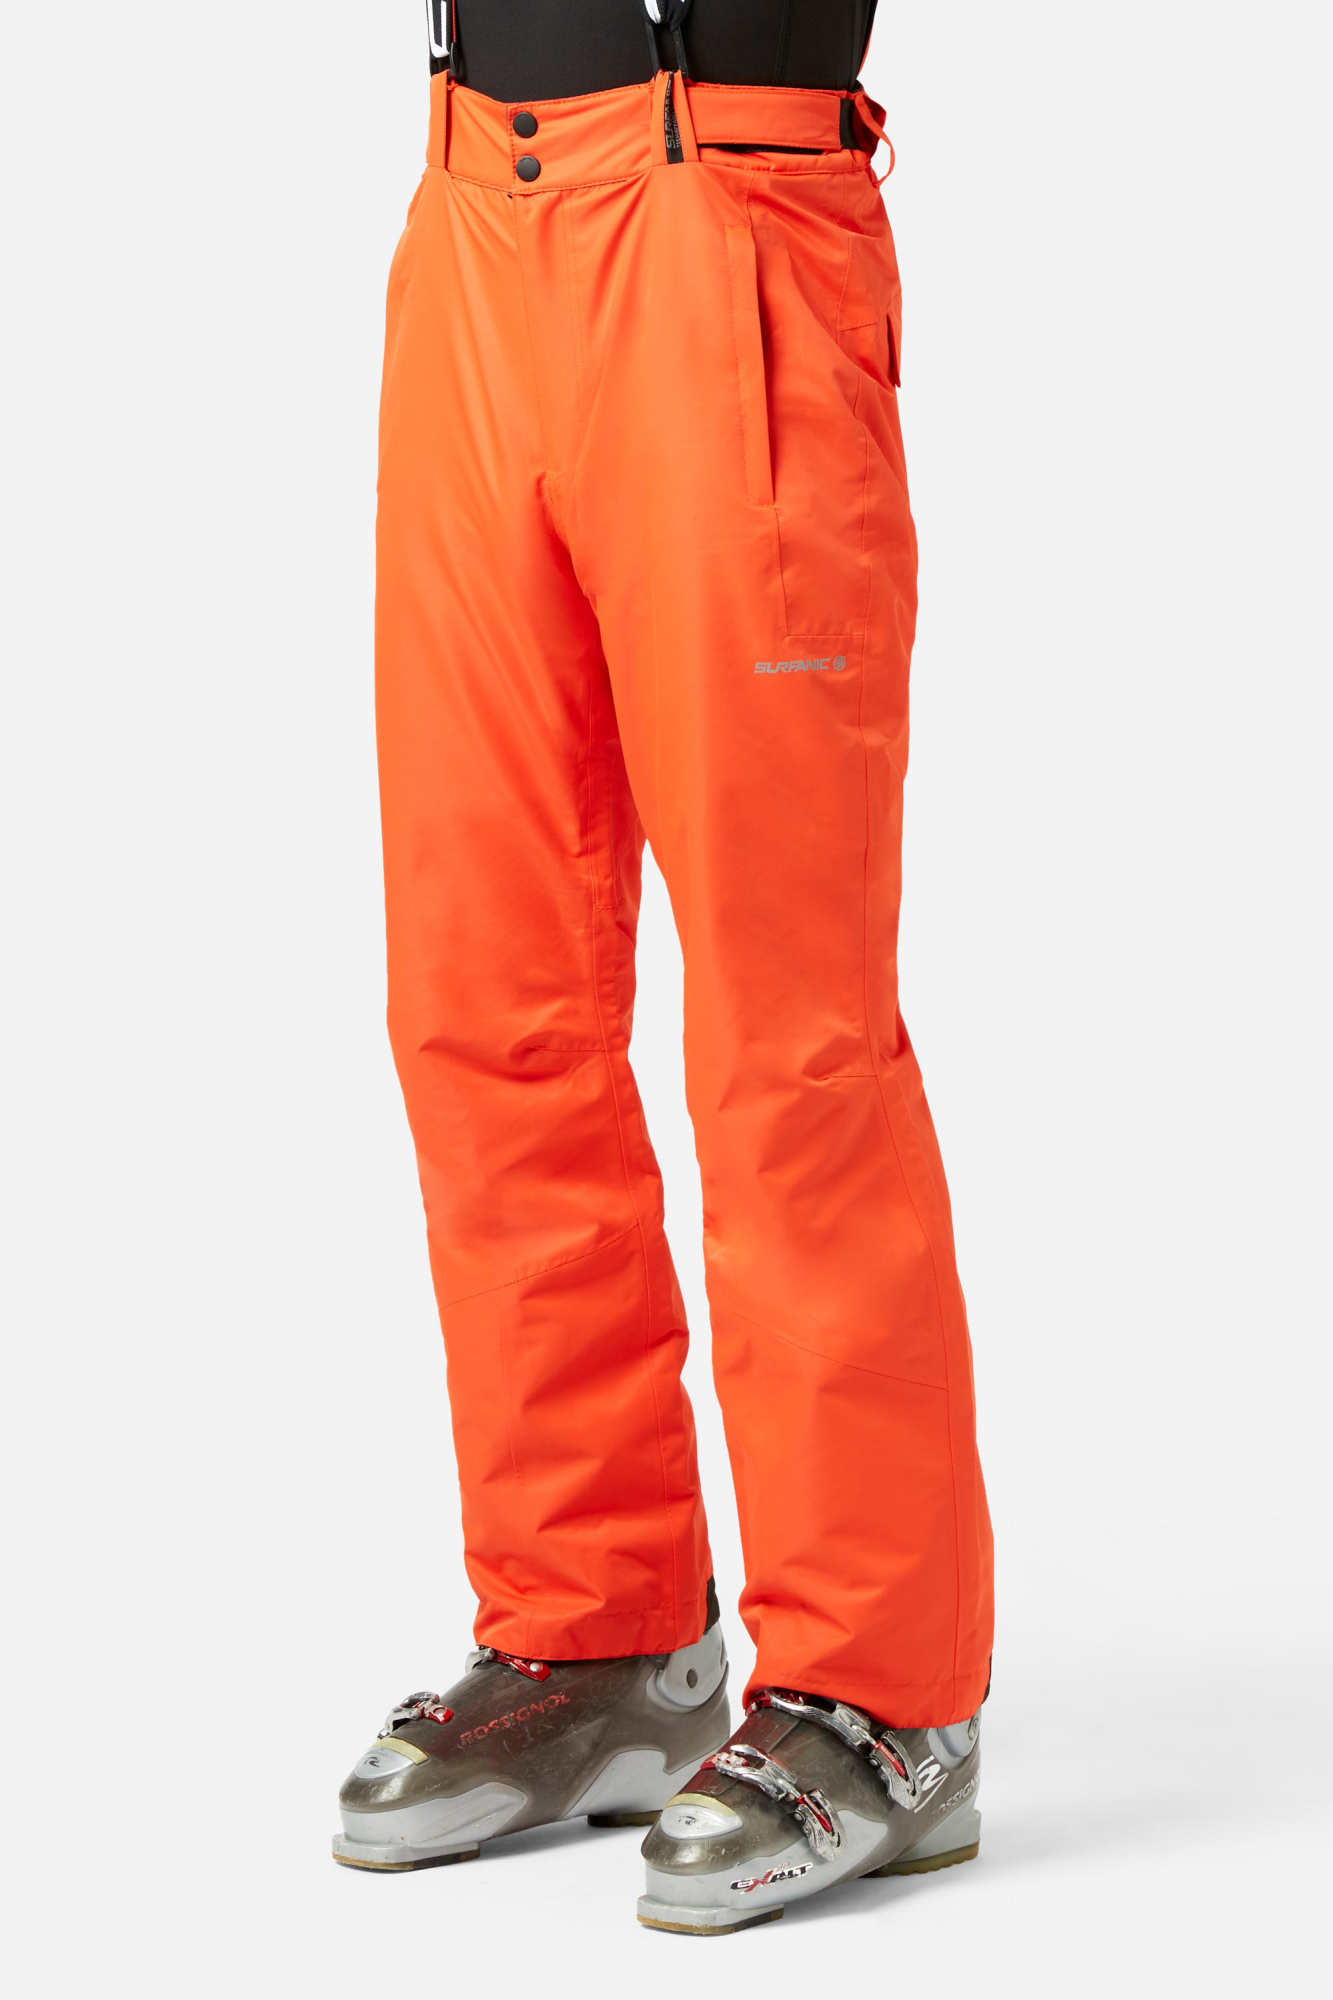 Surfanic Mens Comrade Surftex Pant Orange - Size: Medium